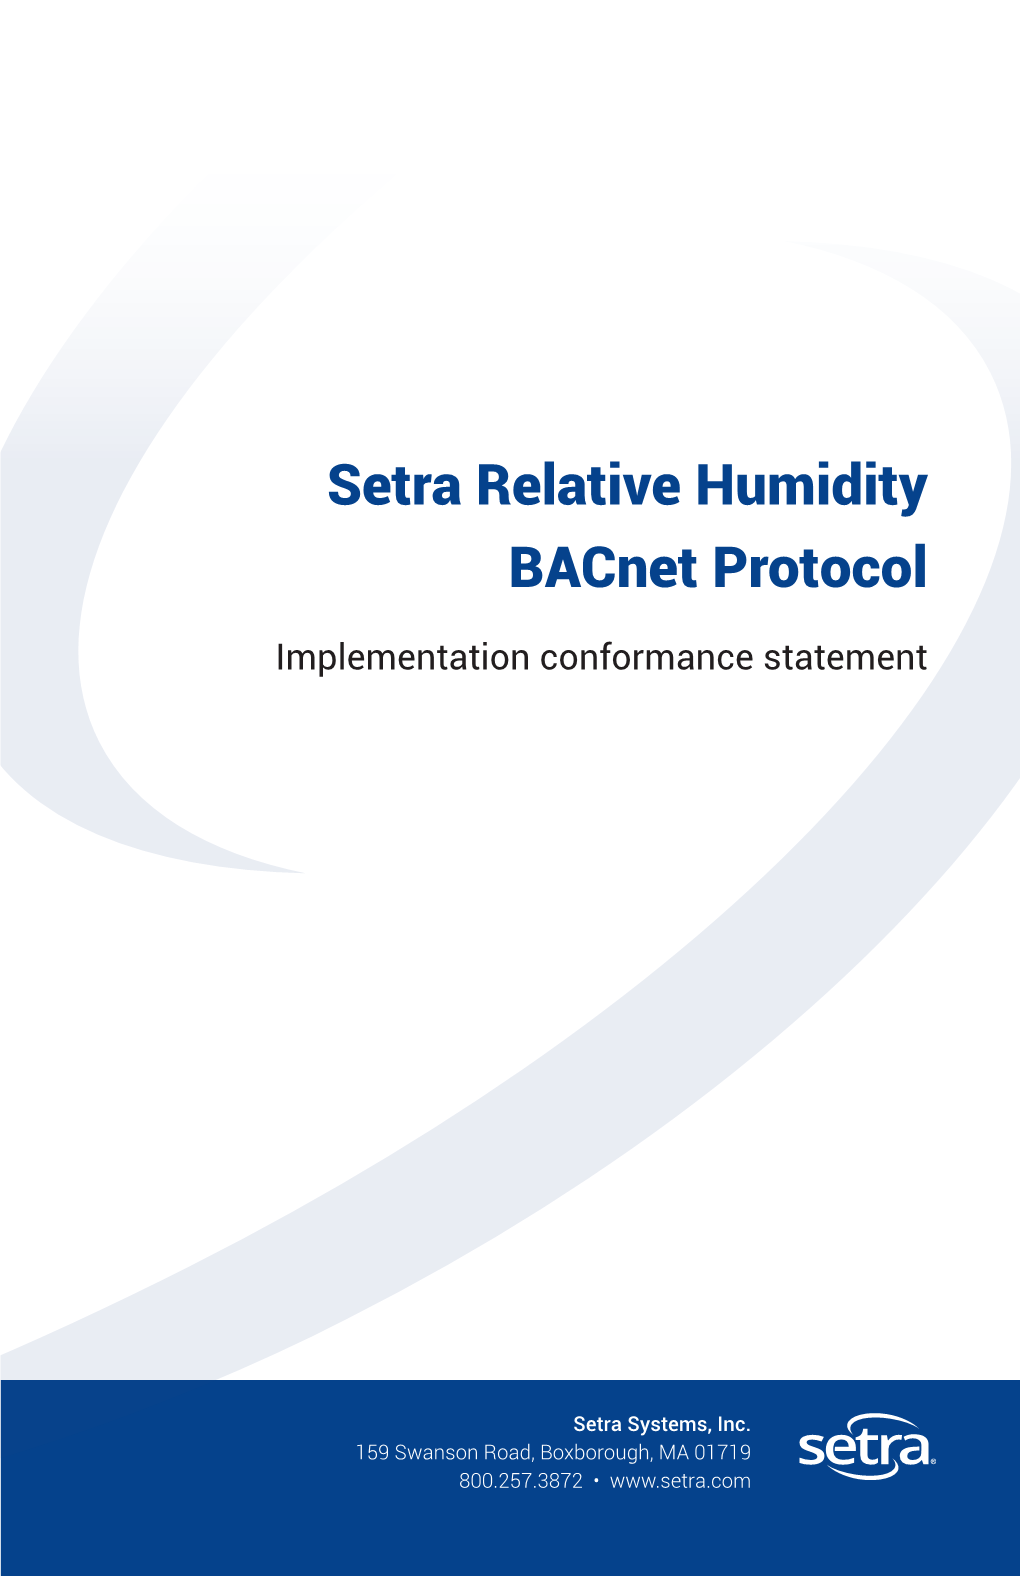 Setra Relative Humidity Bacnet Protocol